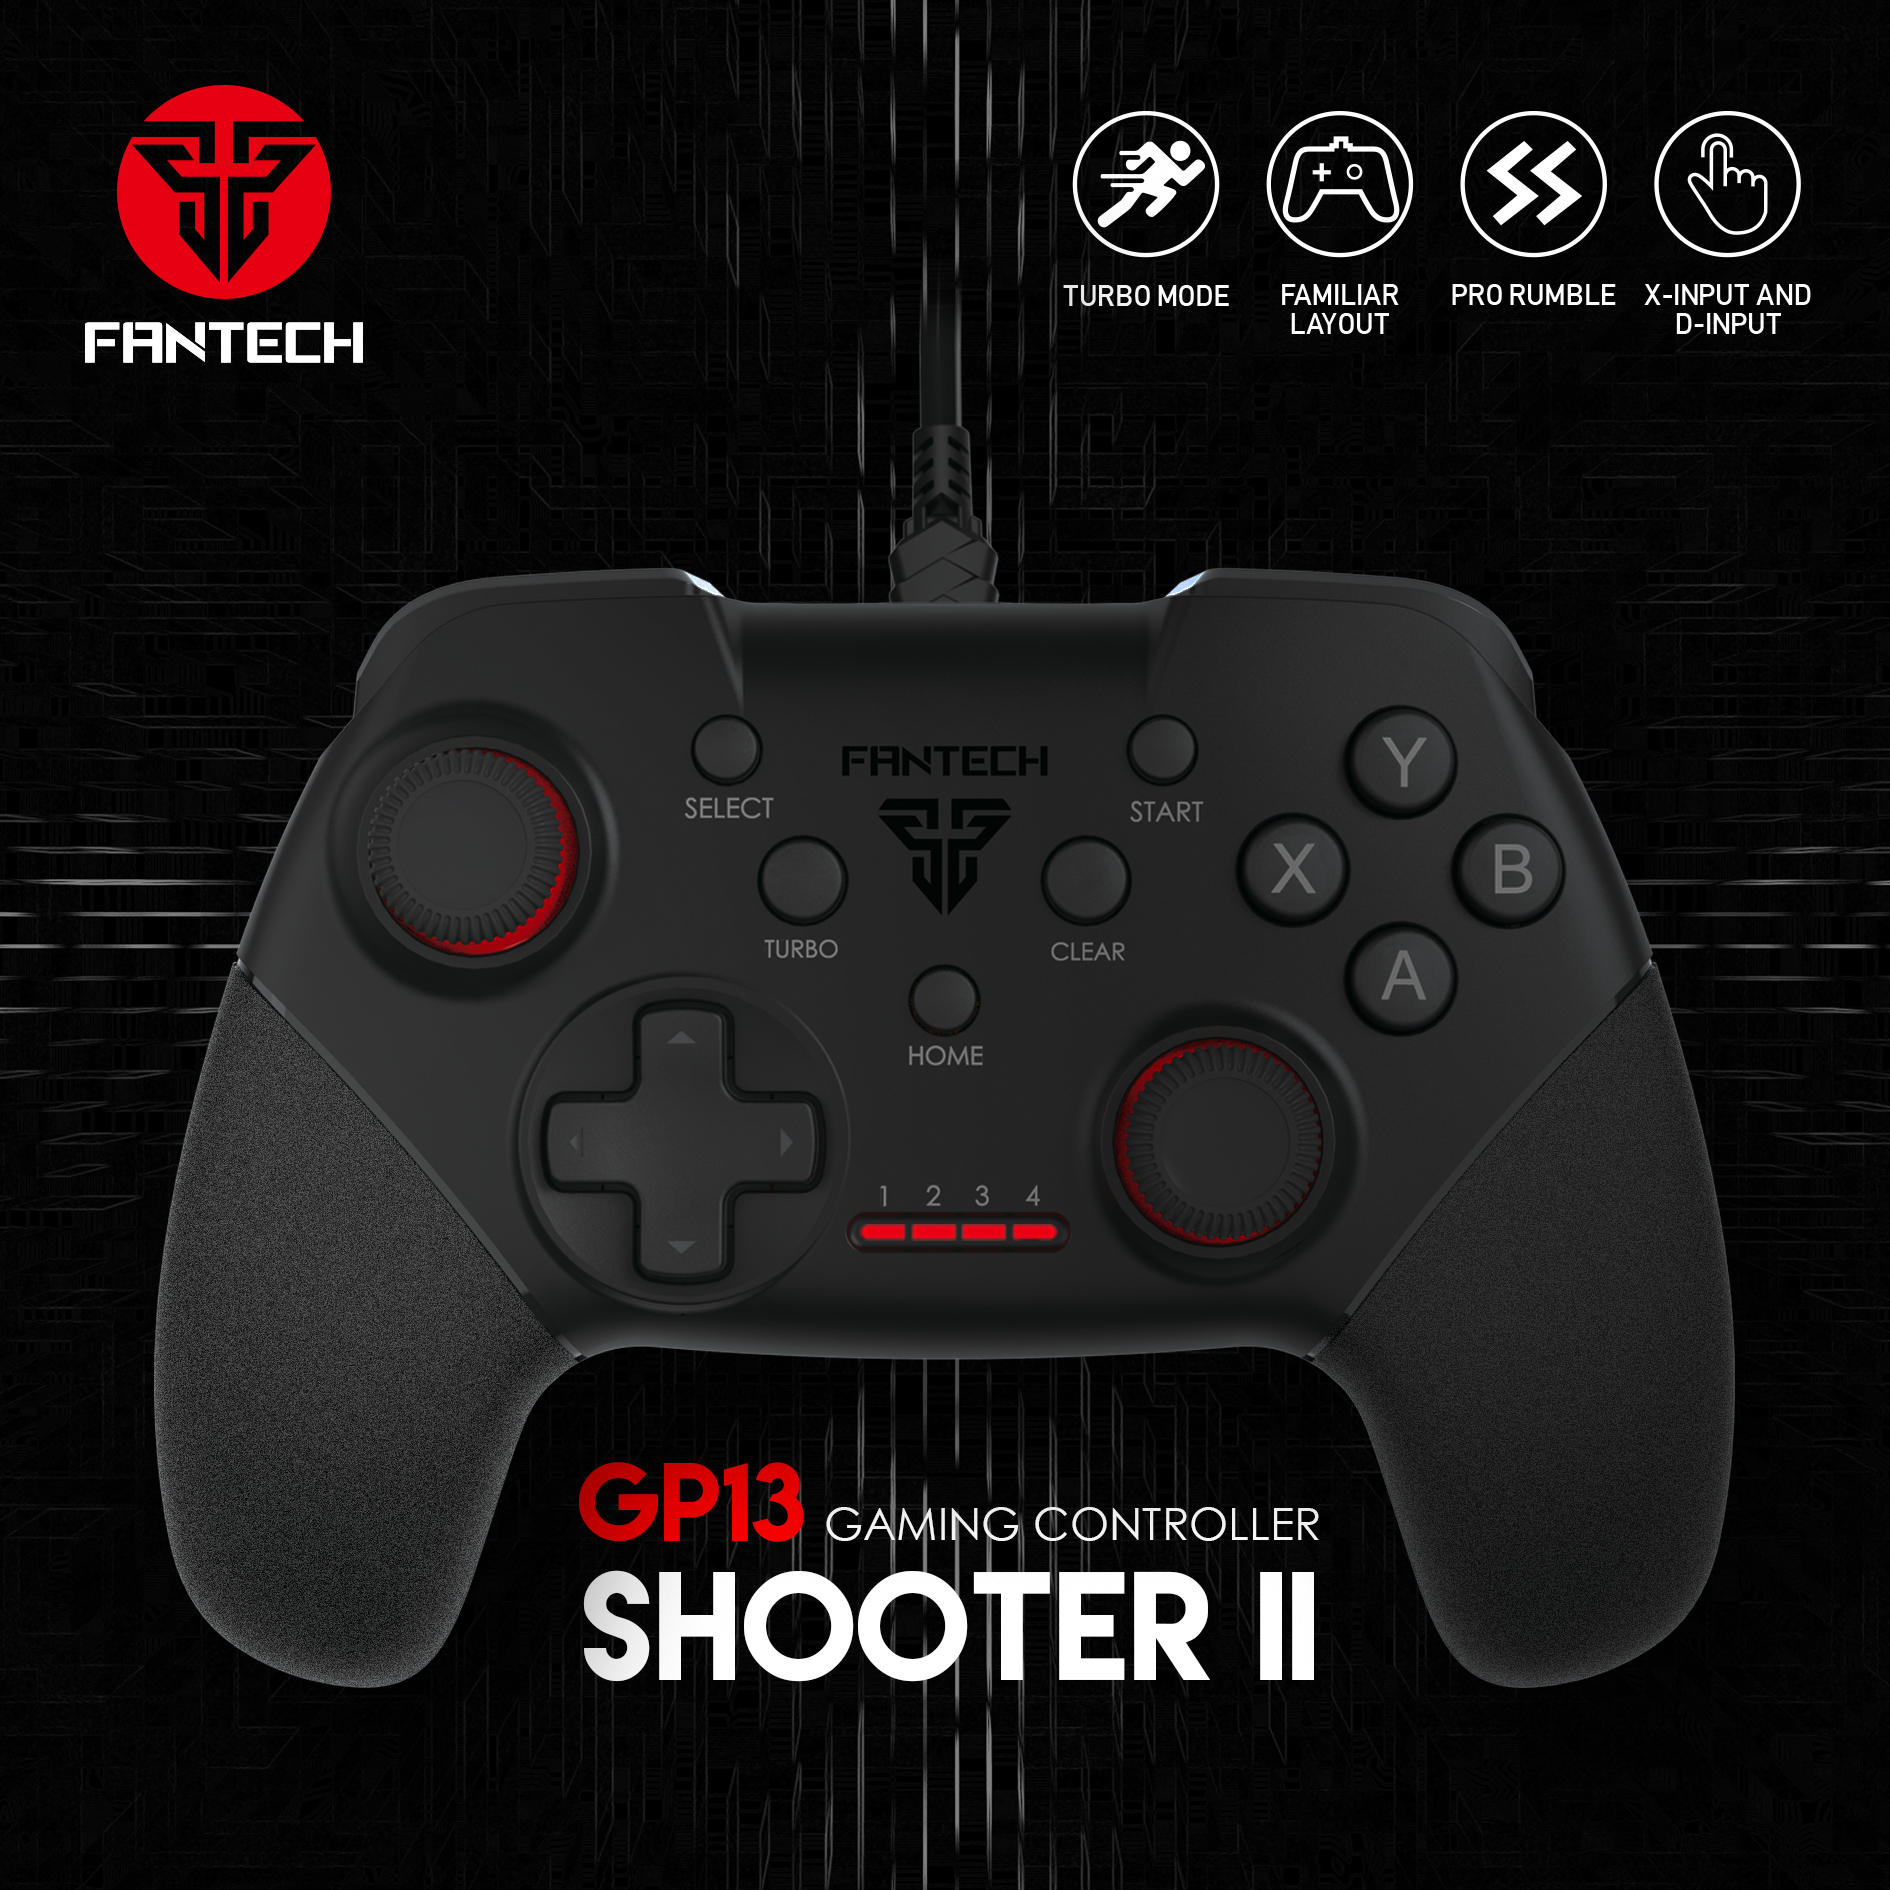 FANTECH SHOOTER II GP13 GAMING CONTROLLER